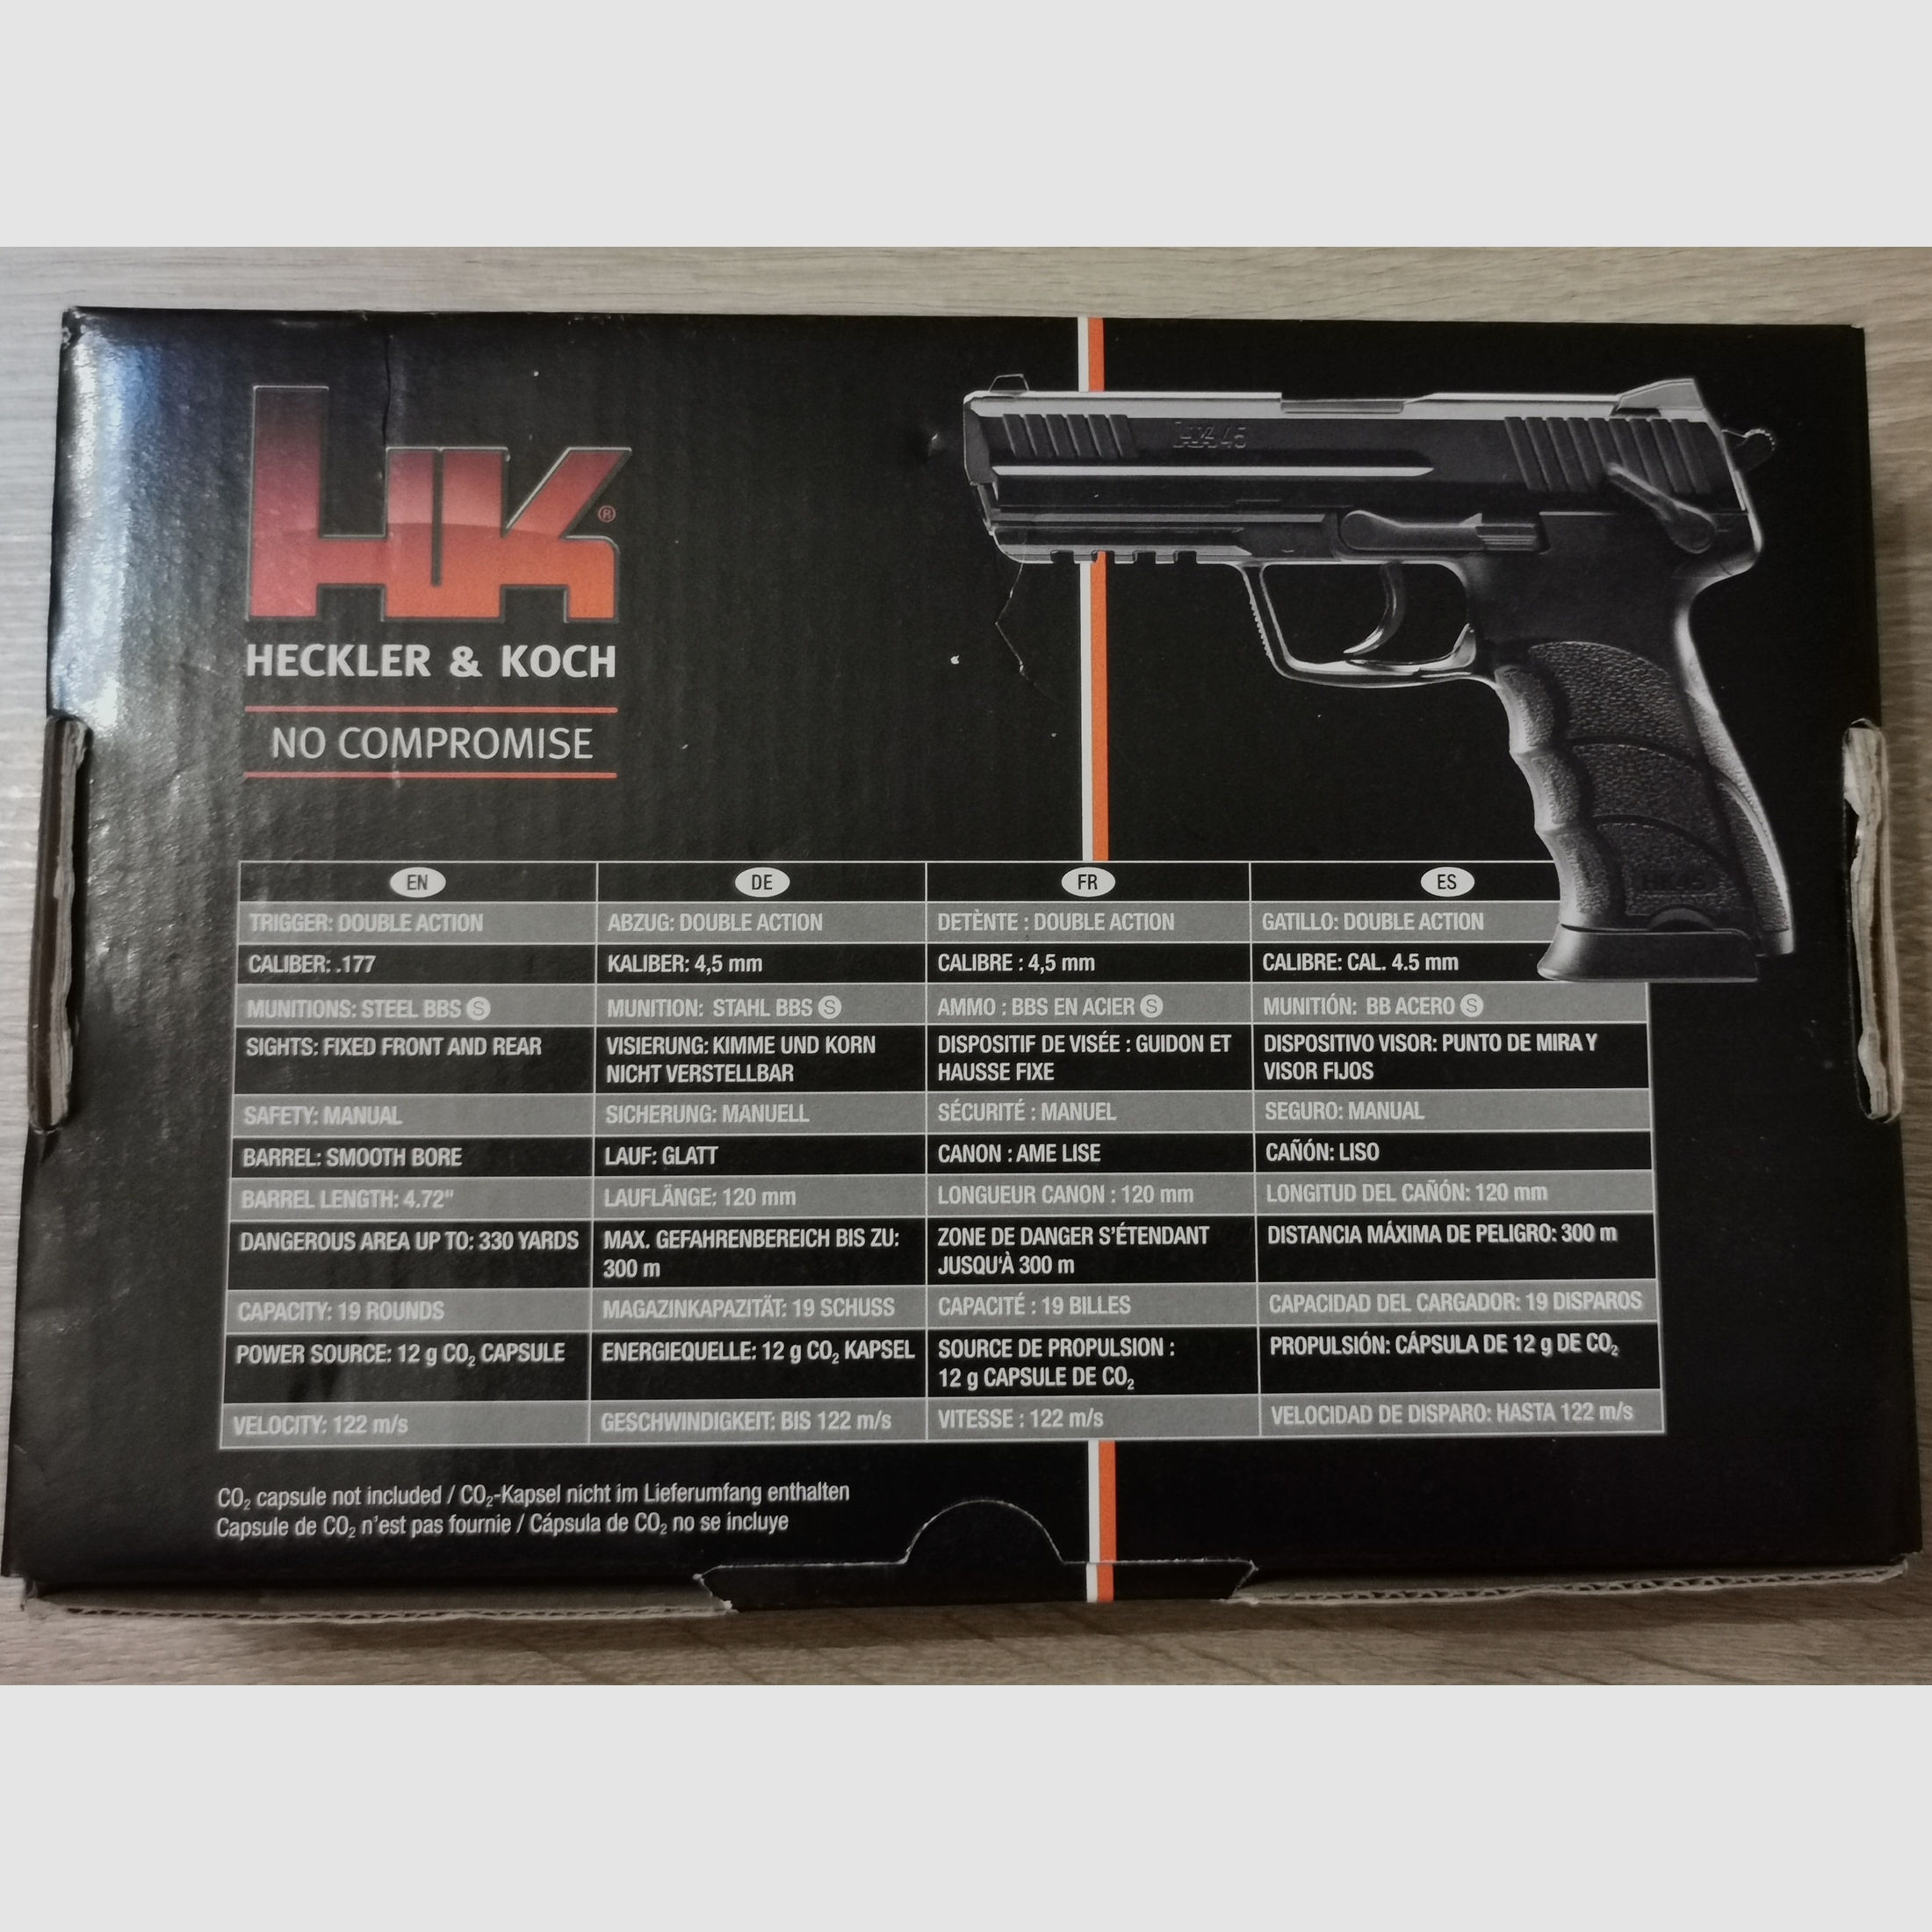 Heckler & Koch HK45 Co2-Pistole 4,5 mm Stahl BB